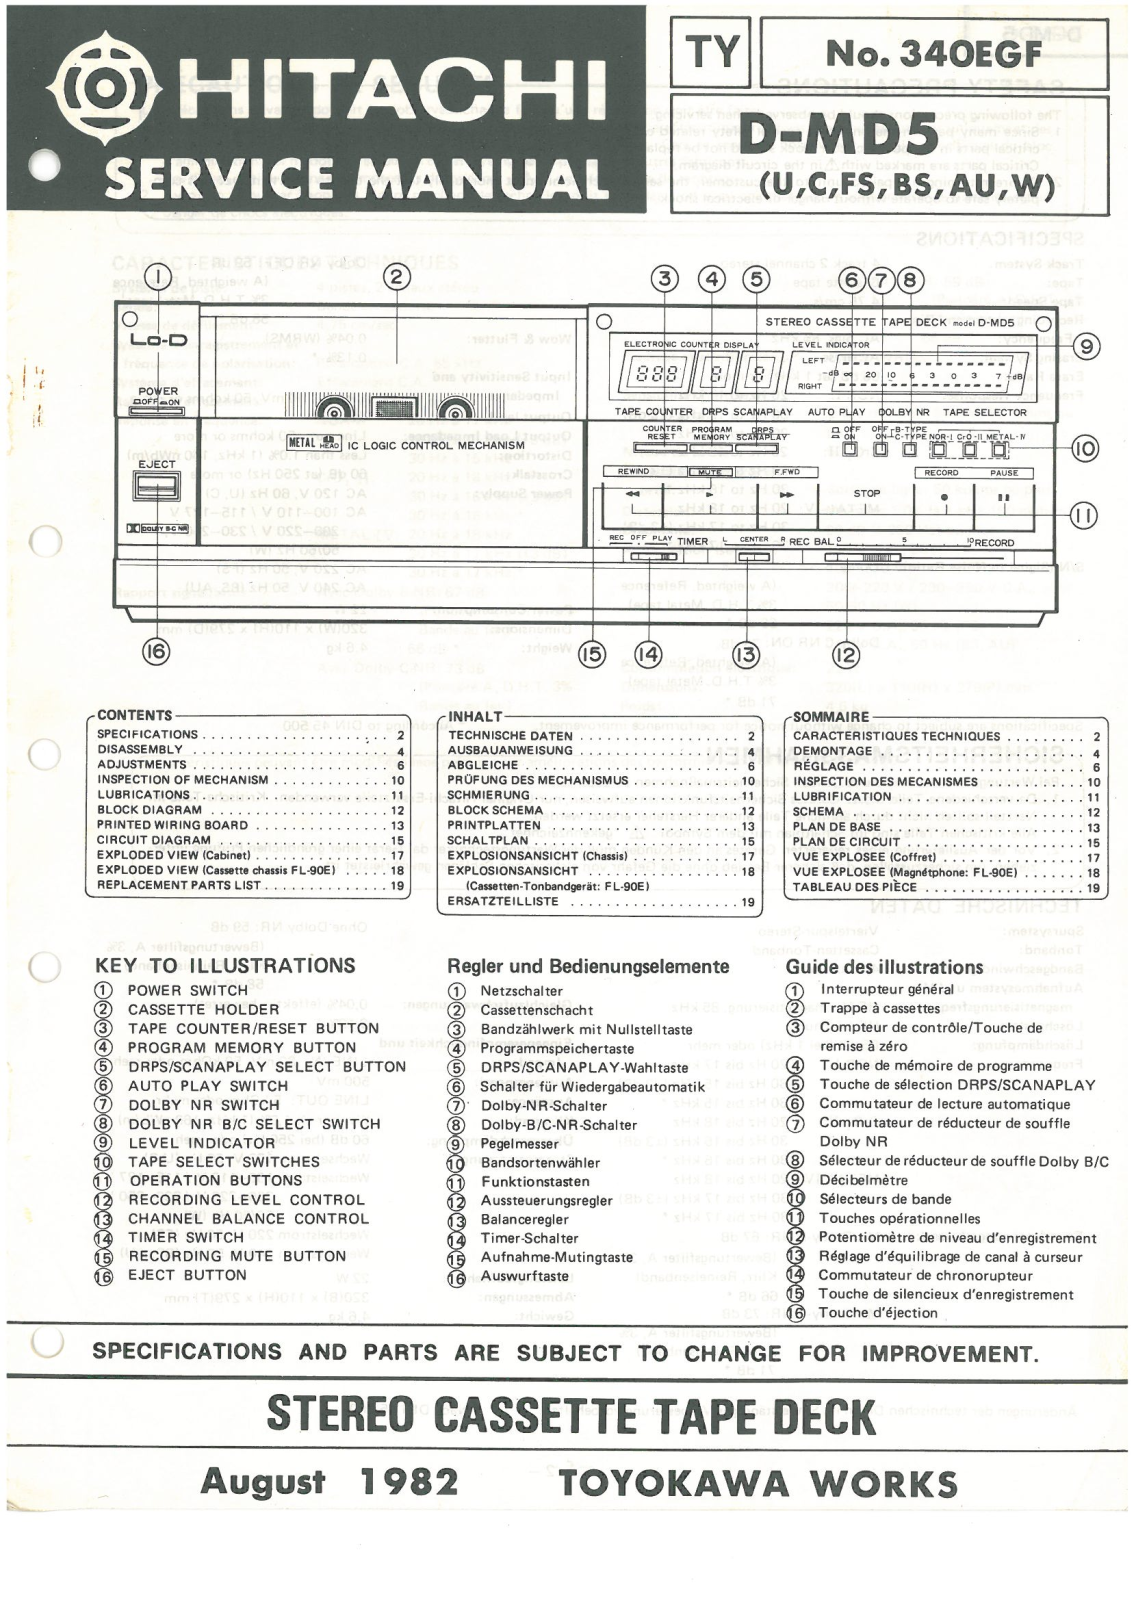 Hitachi DMD-5 Service Manual